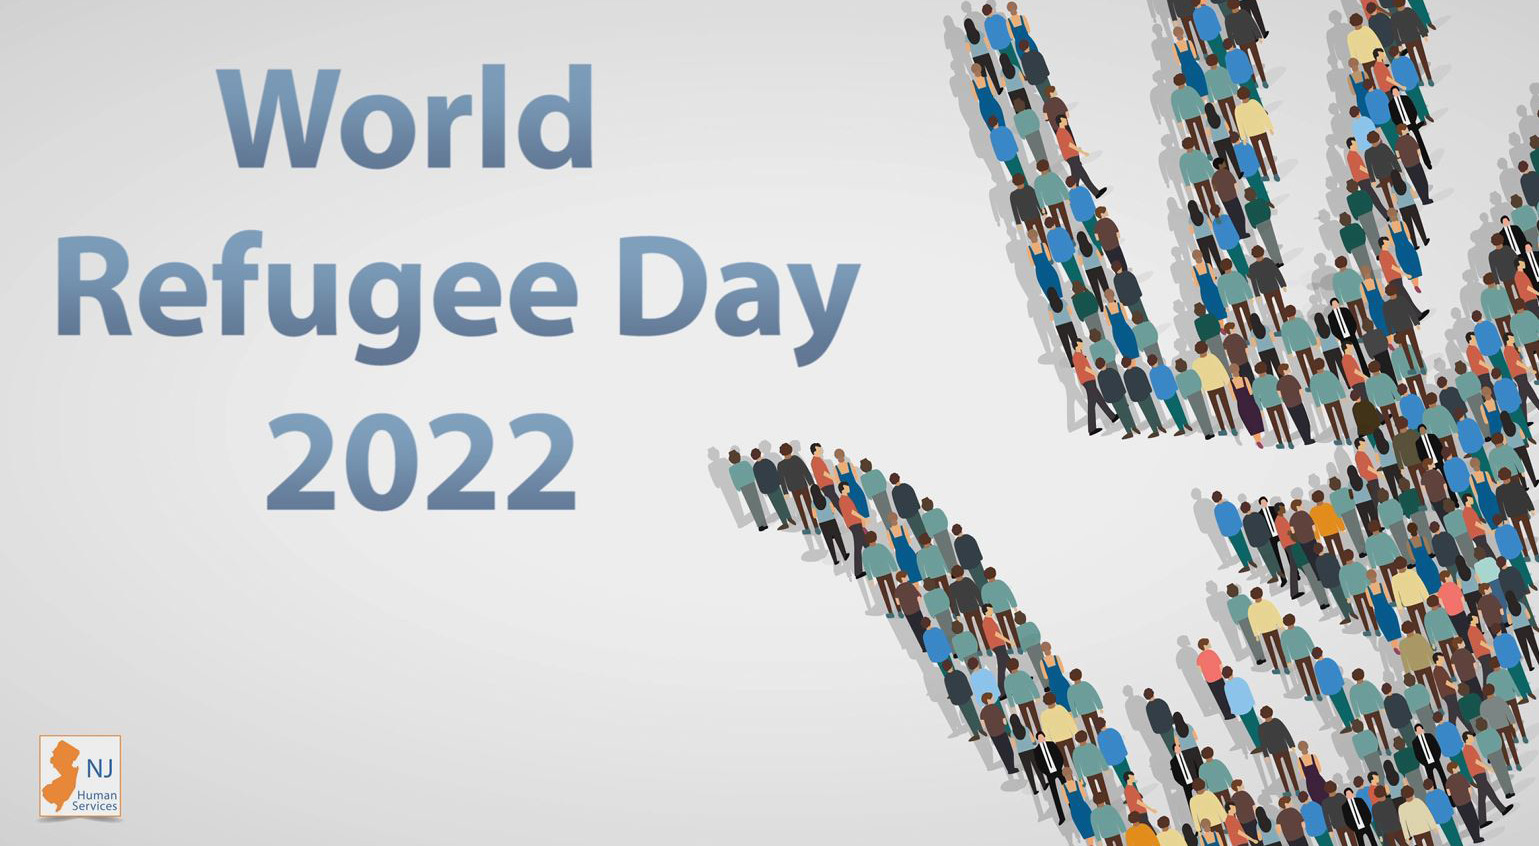 VIDEO - NJ Human Services Celebrates World Refugee Day 2022